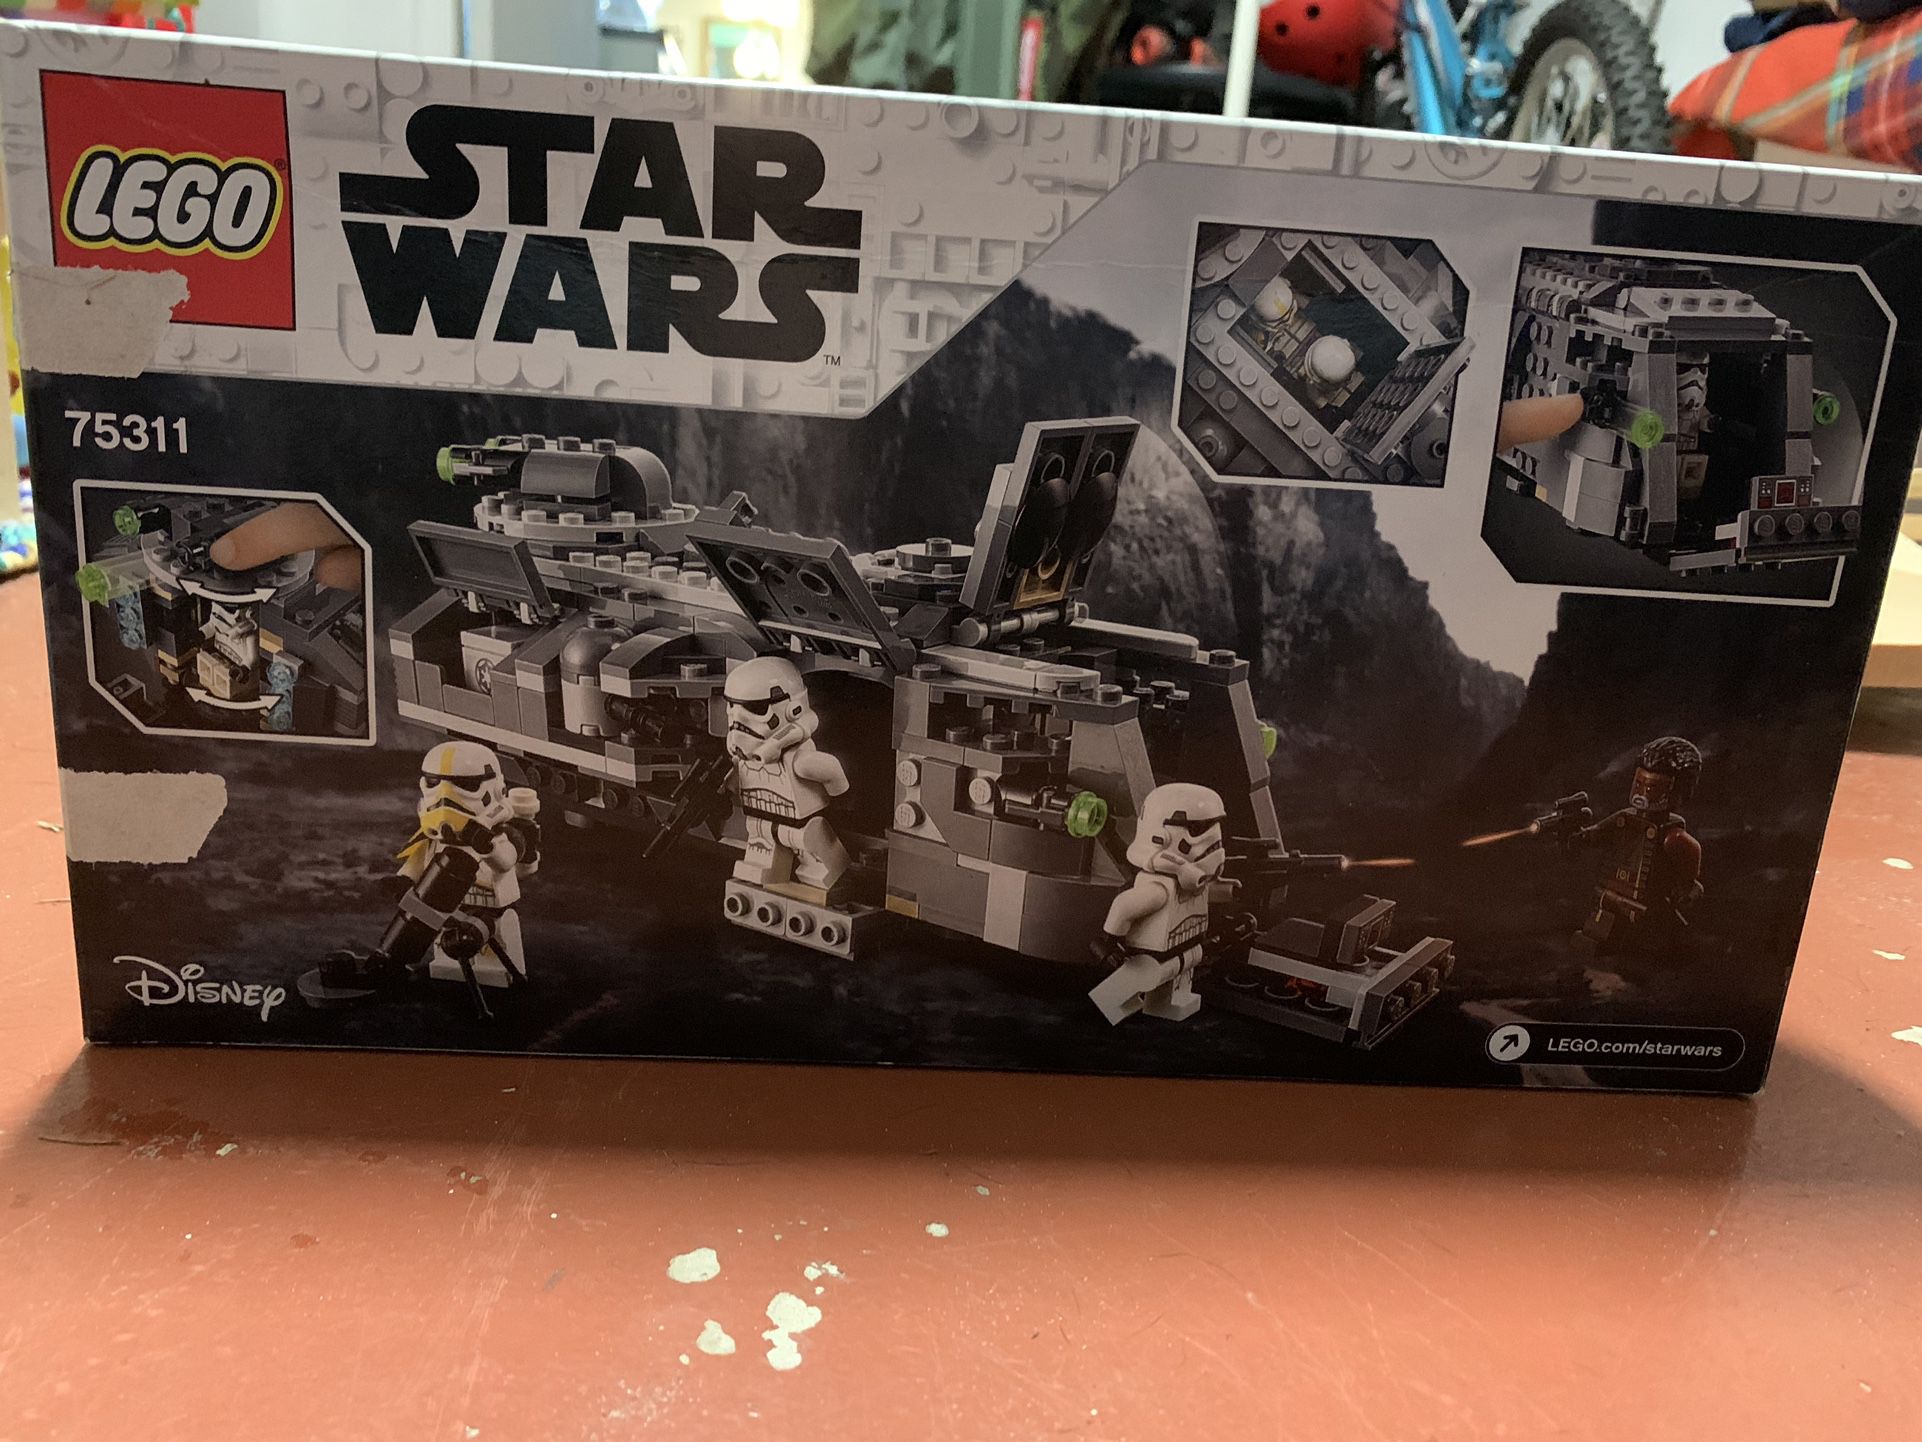 Unopened Lego Star Wars Set